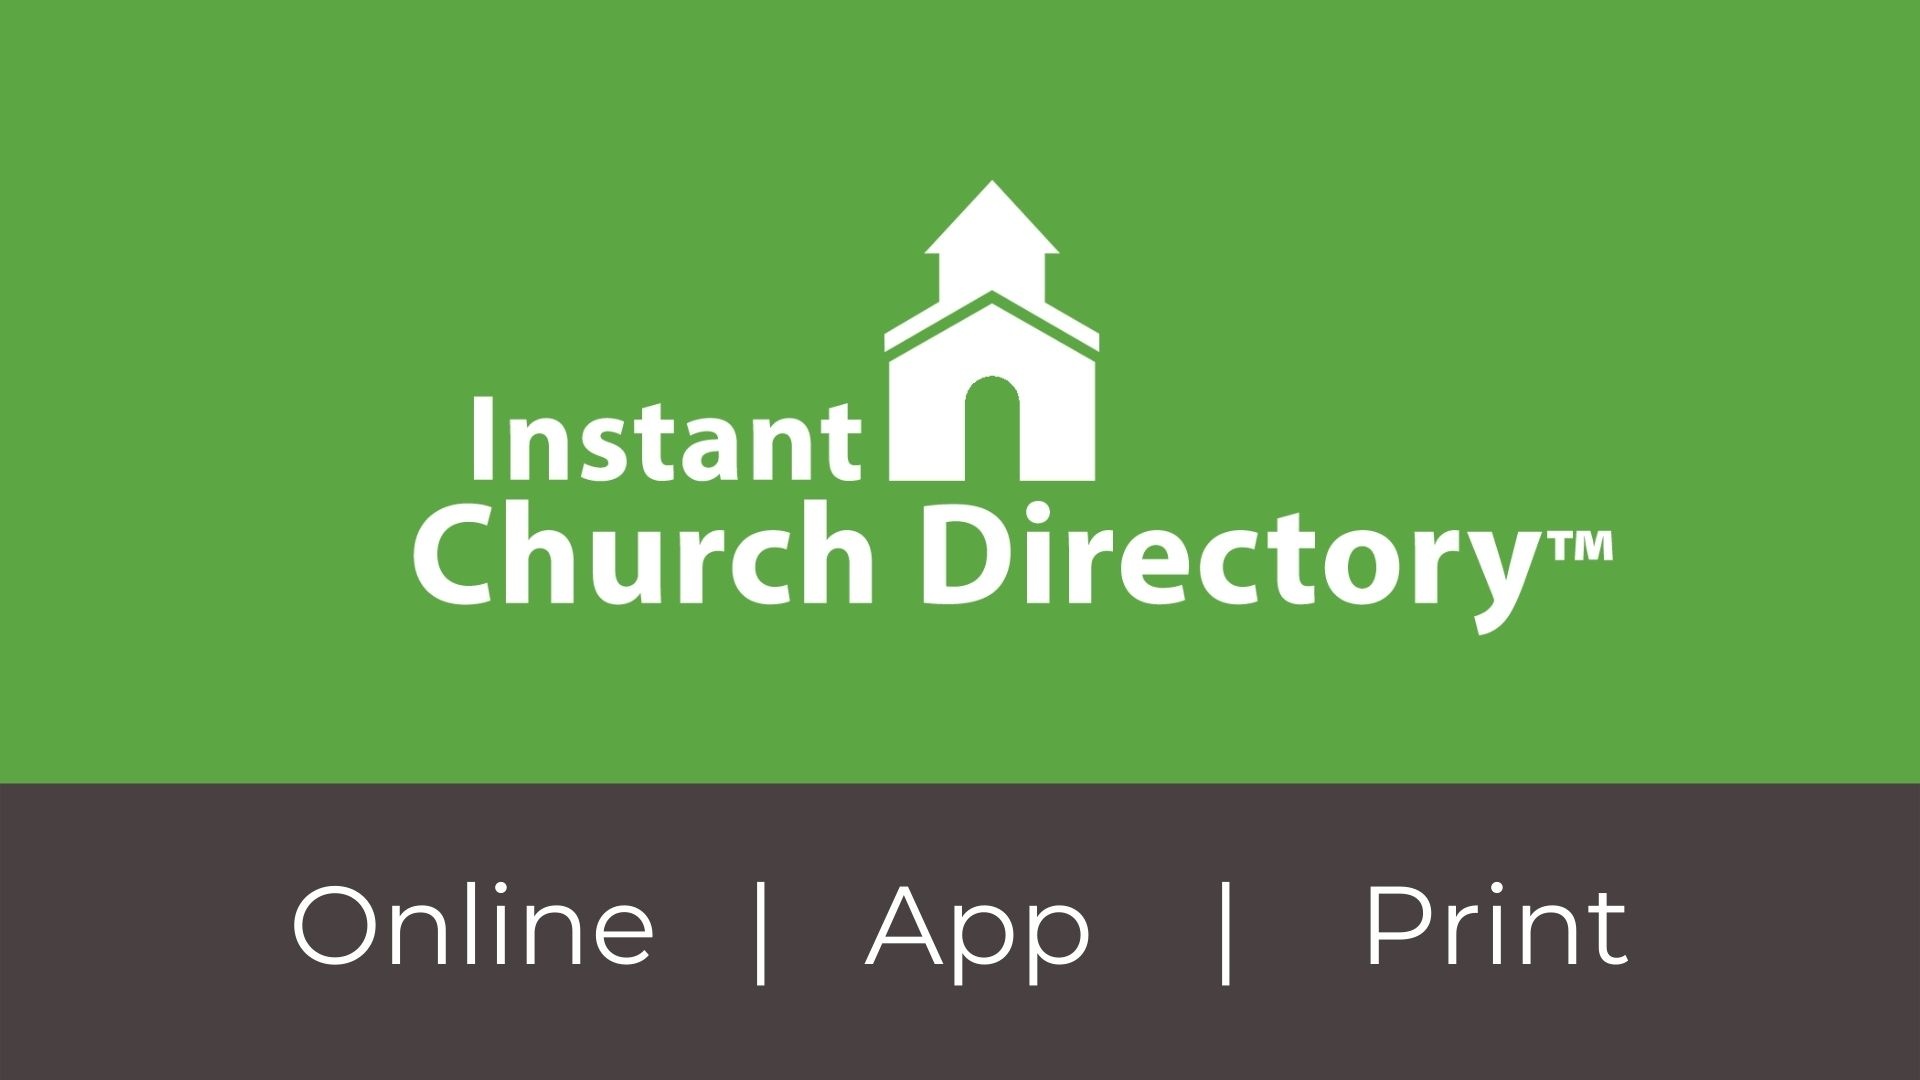 Instant Church Directory Online, App, Print